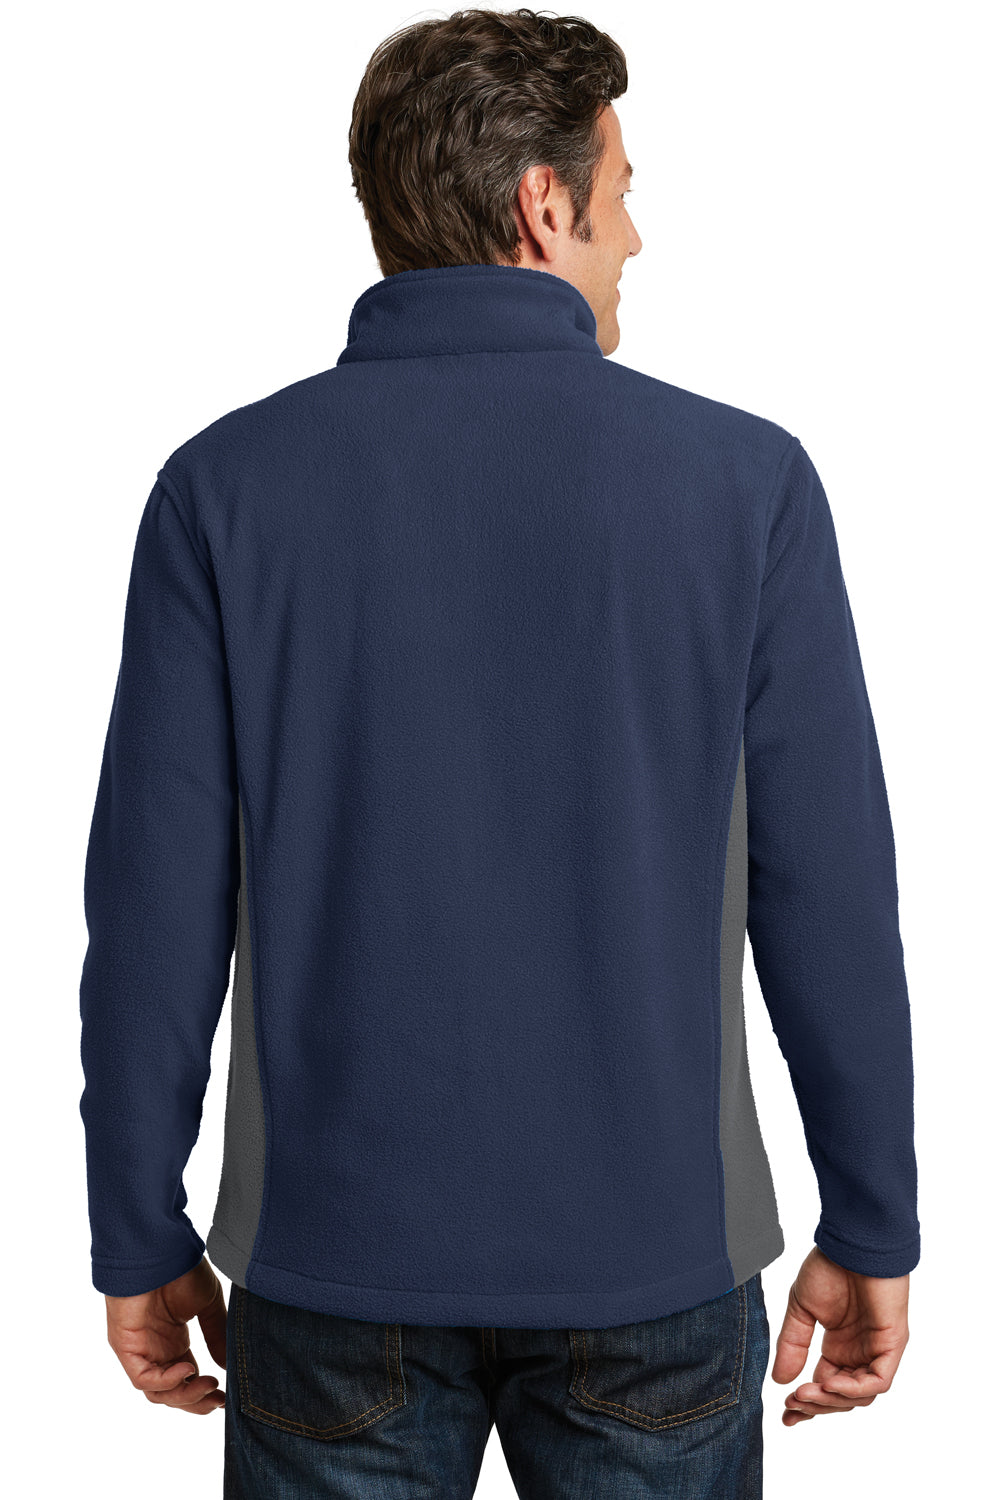 Port Authority F216 Mens Full Zip Fleece Jacket Navy Blue/Grey Back